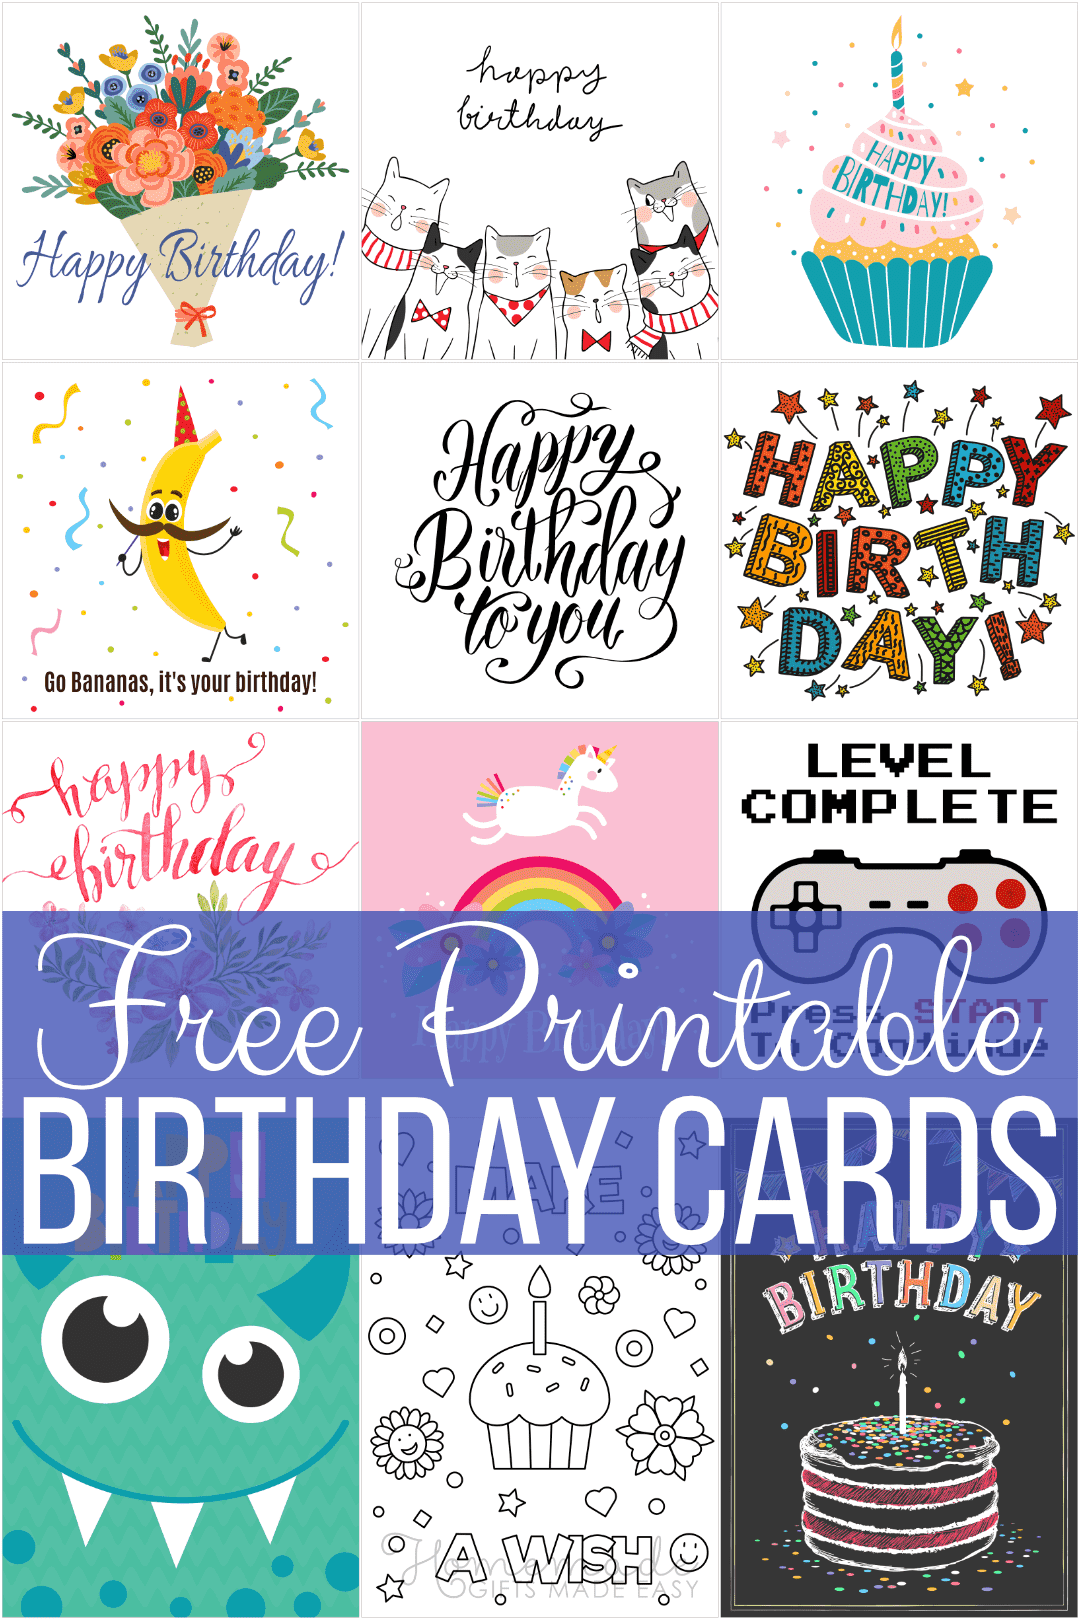 Birthday Cards Greeting Cards Paper Birthday Card Happy Birthday 